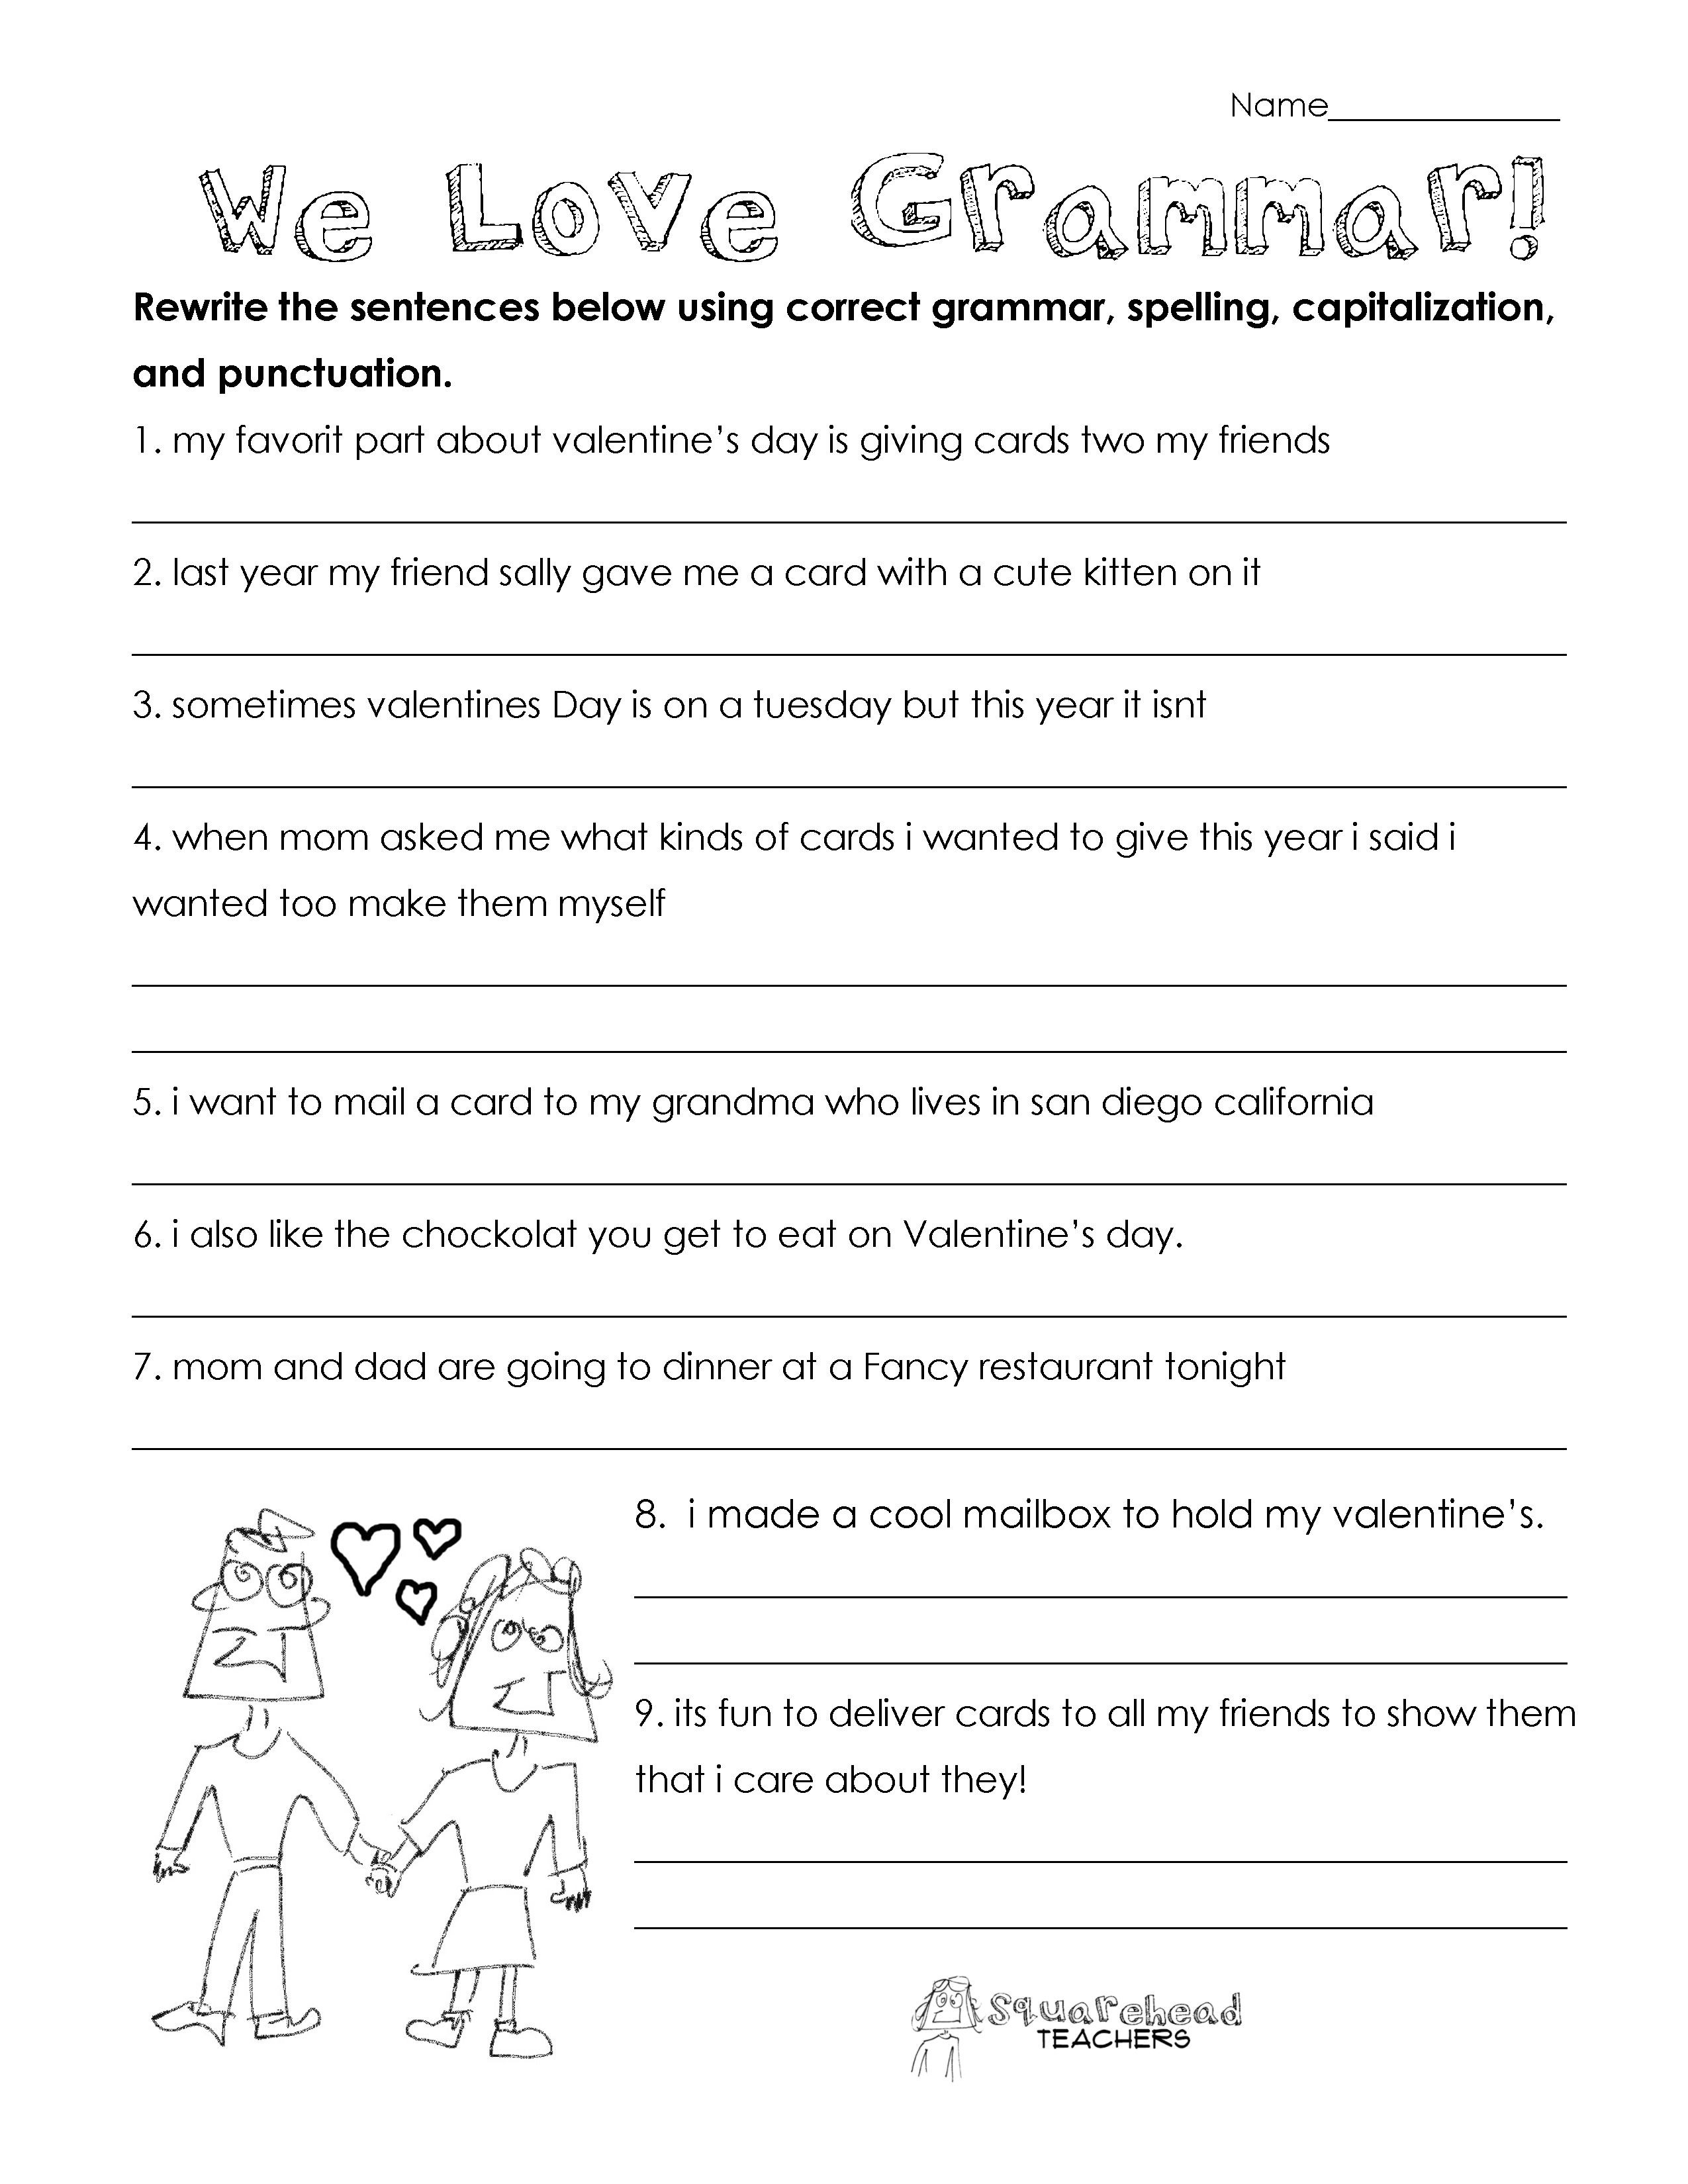 Proofreading Worksheets 3rd Grade Valentine S Day Grammar Free Worksheet for 3rd Grade and Up